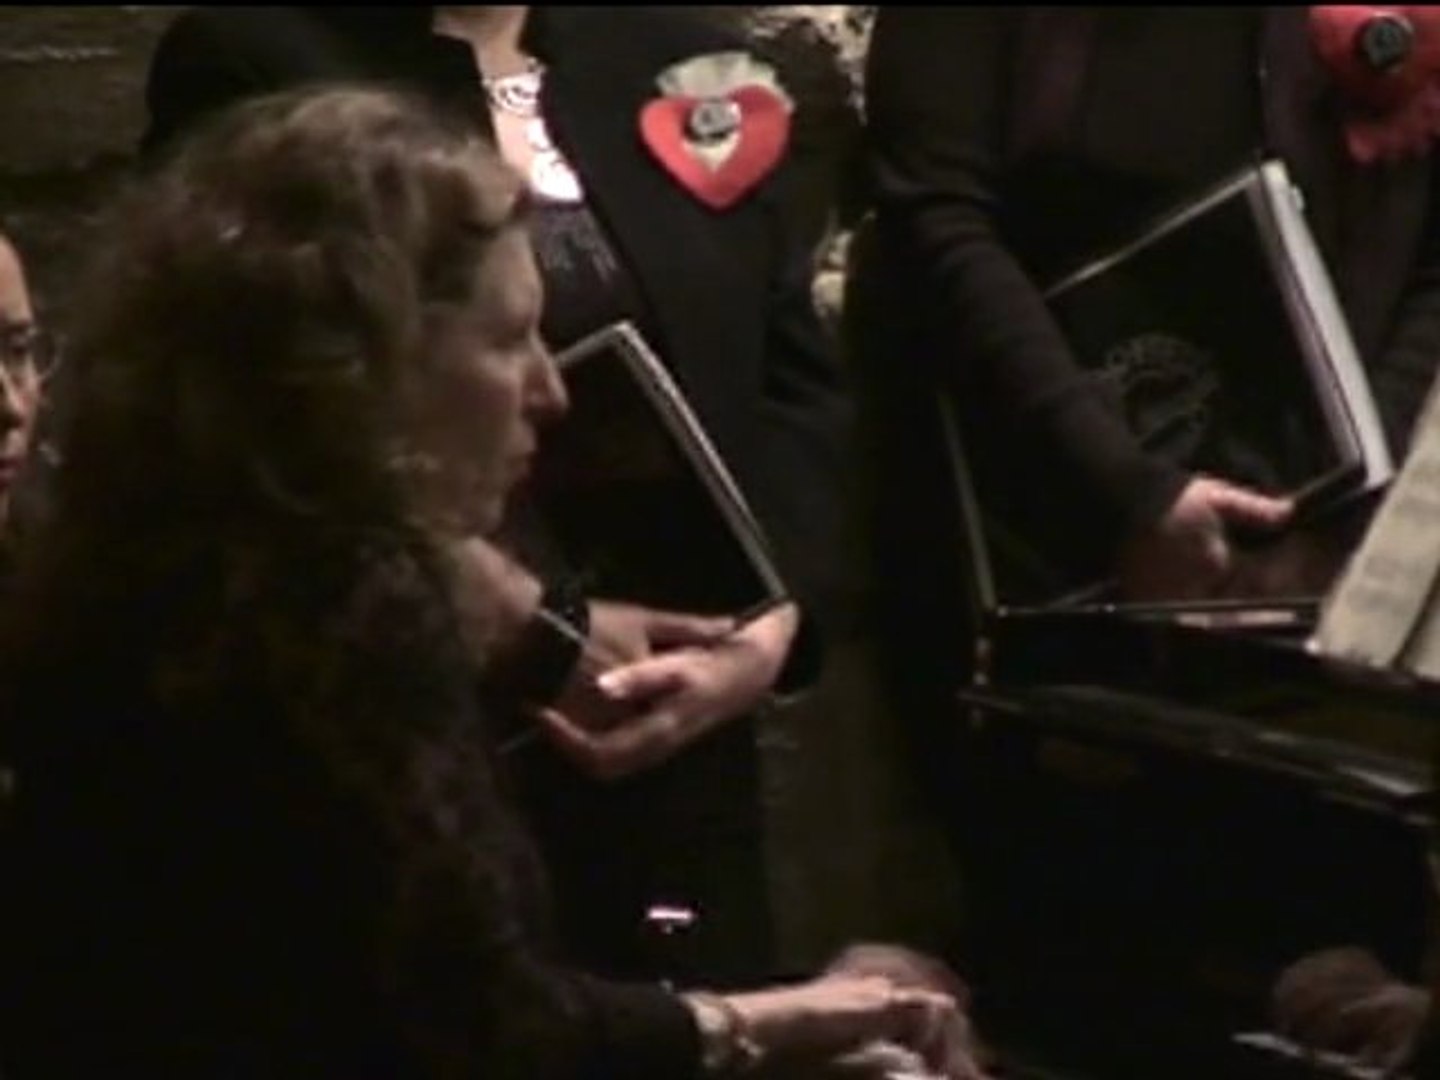 NOCTURNE CHOPIN MARIE-ANGE PIERRE-BREARD AU PIANO - Vidéo Dailymotion